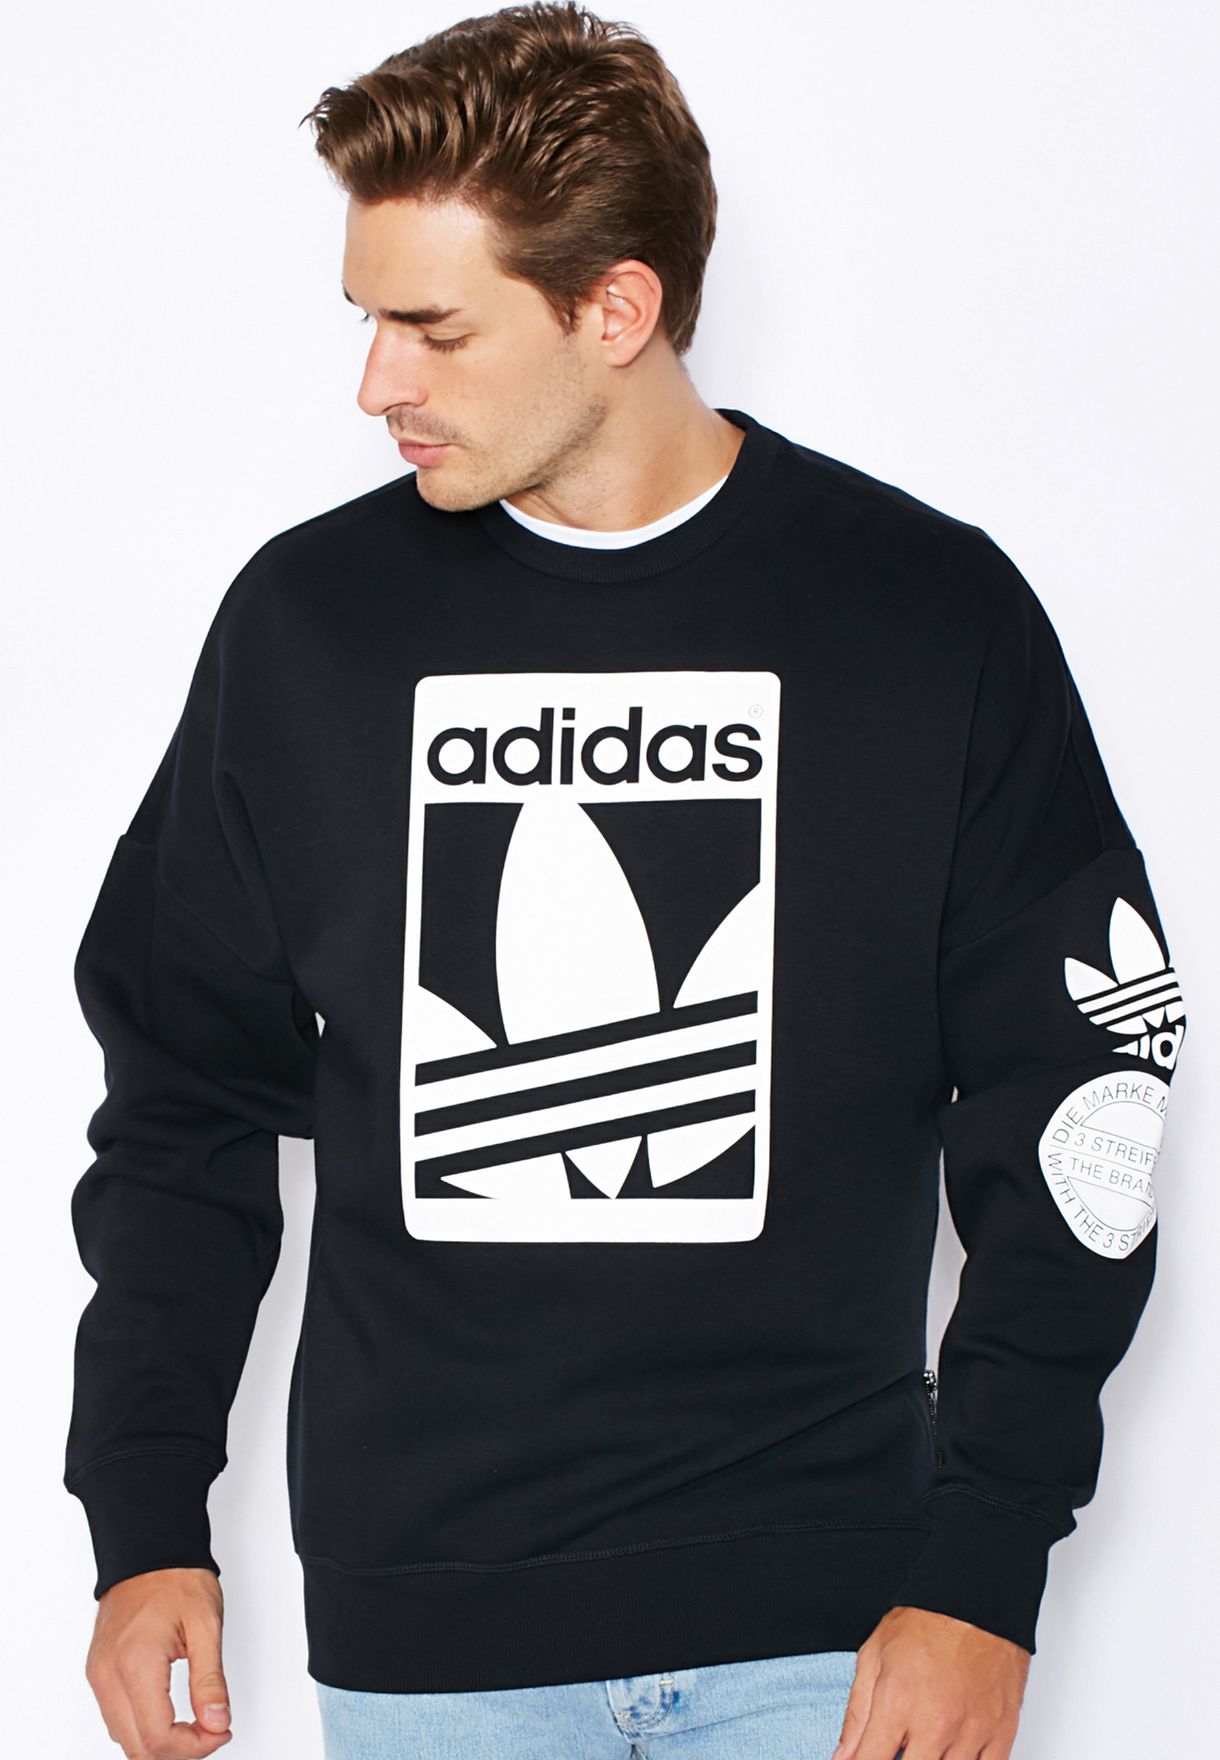 adidas street graphic sweatshirt